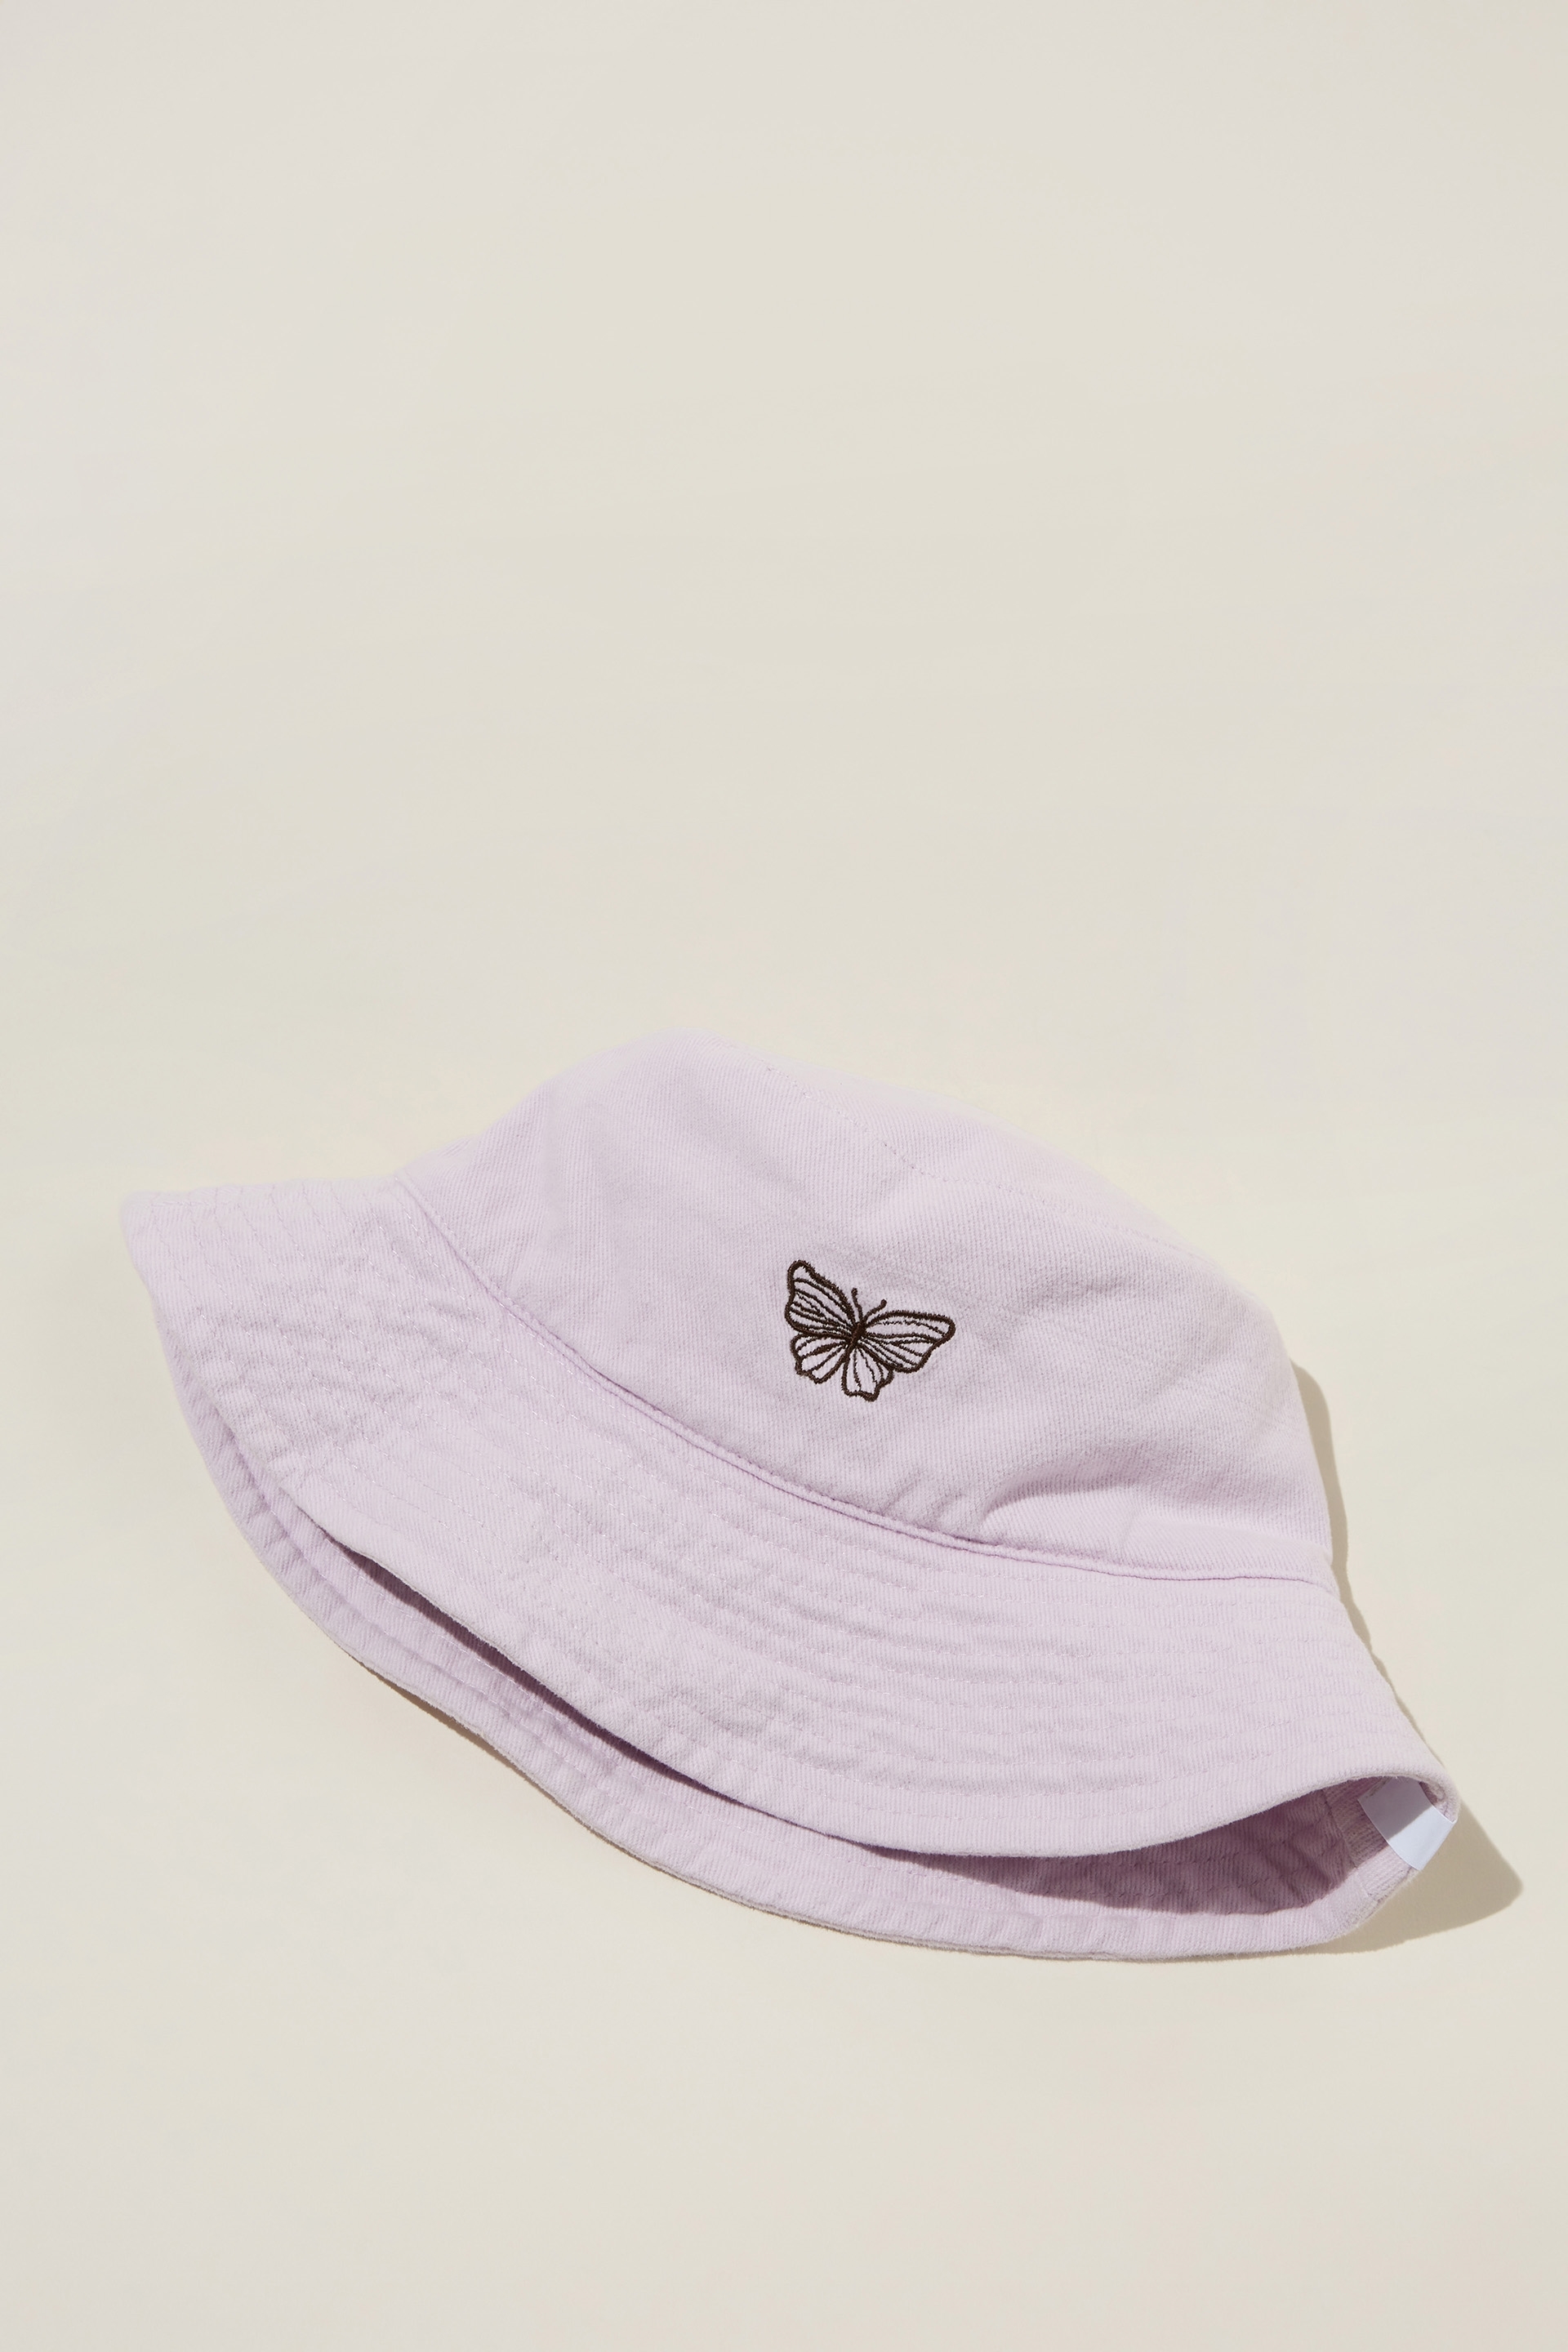 Rubi - Bianca Bucket Hat - Angel number butterfly 444